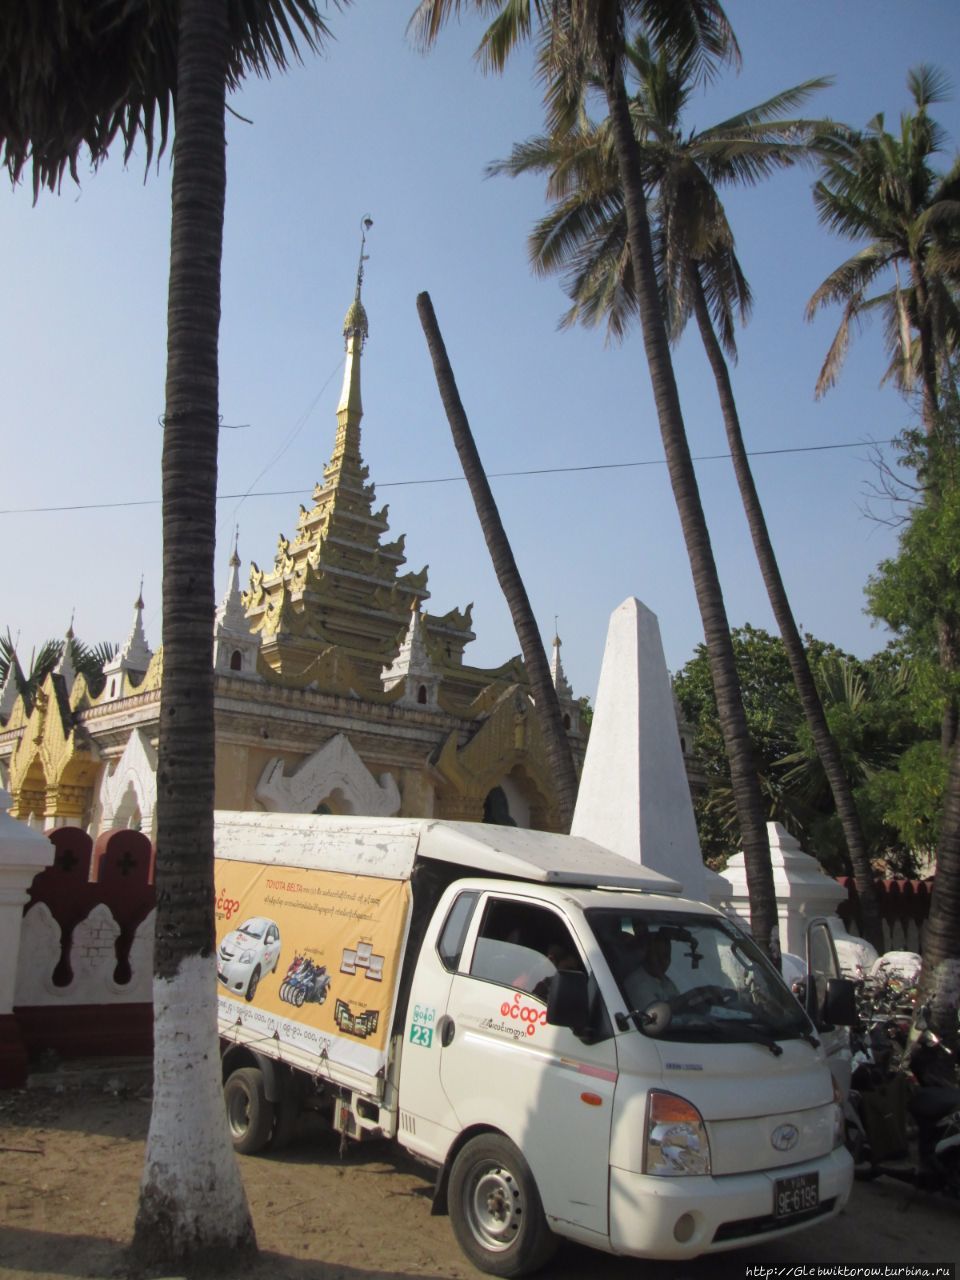 Прогулка по территории дворца-новодела Шуэбо, Мьянма